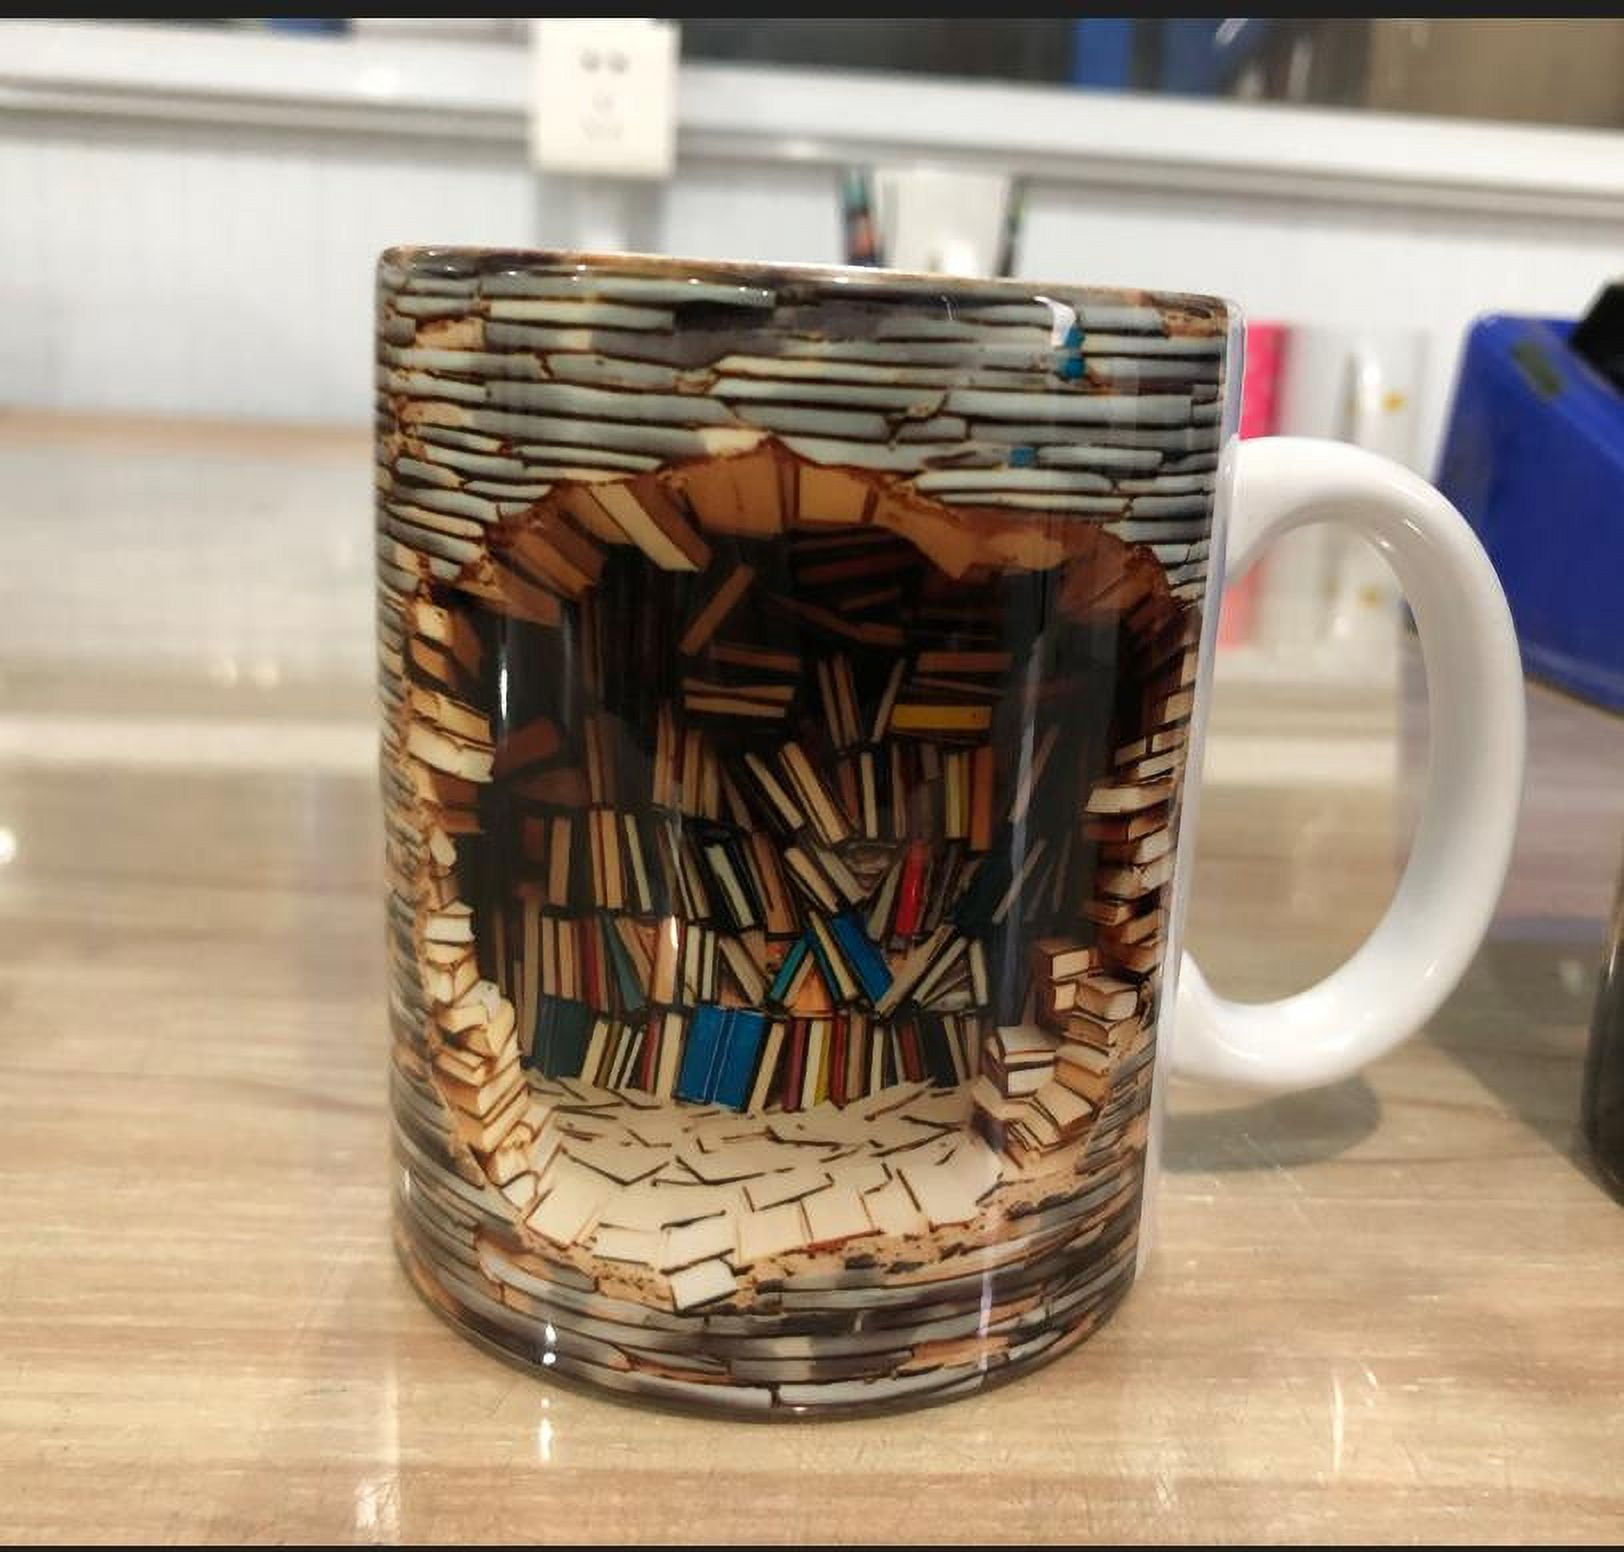 XEOVHV 3D Bookshelf Mug - A Library Shelf Cup, Library Bookshelf Mug, Book  Lovers Coffee Mug, Creative Space Design Multi-Purpose Ceramic Mug, Cool